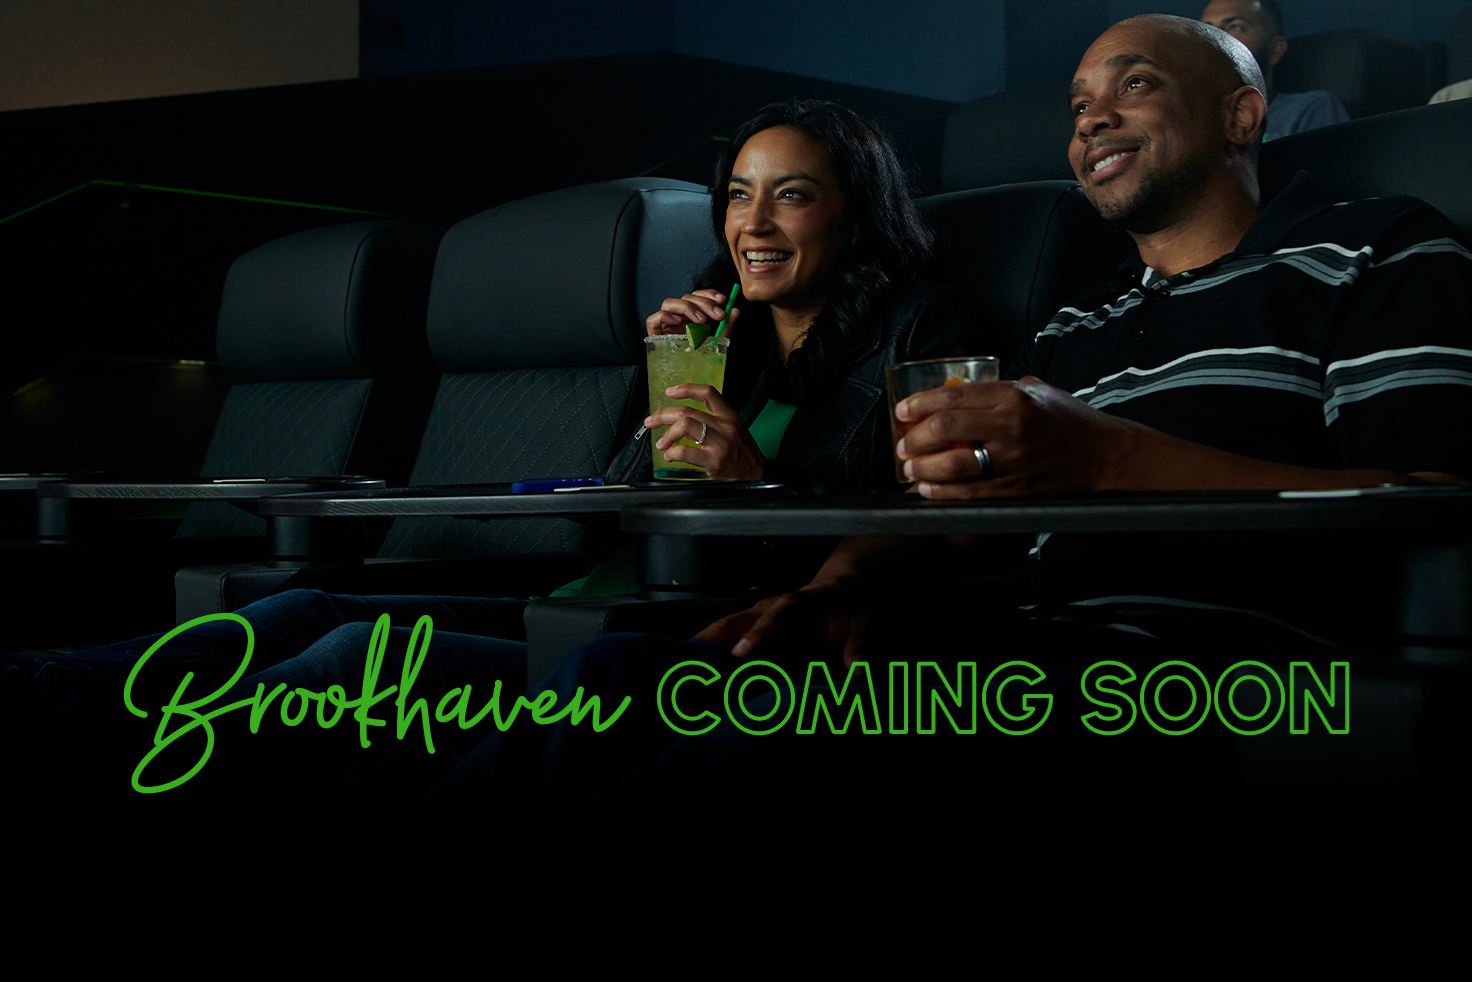 Brookhaven, GA - LOOK Dine-In Cinema